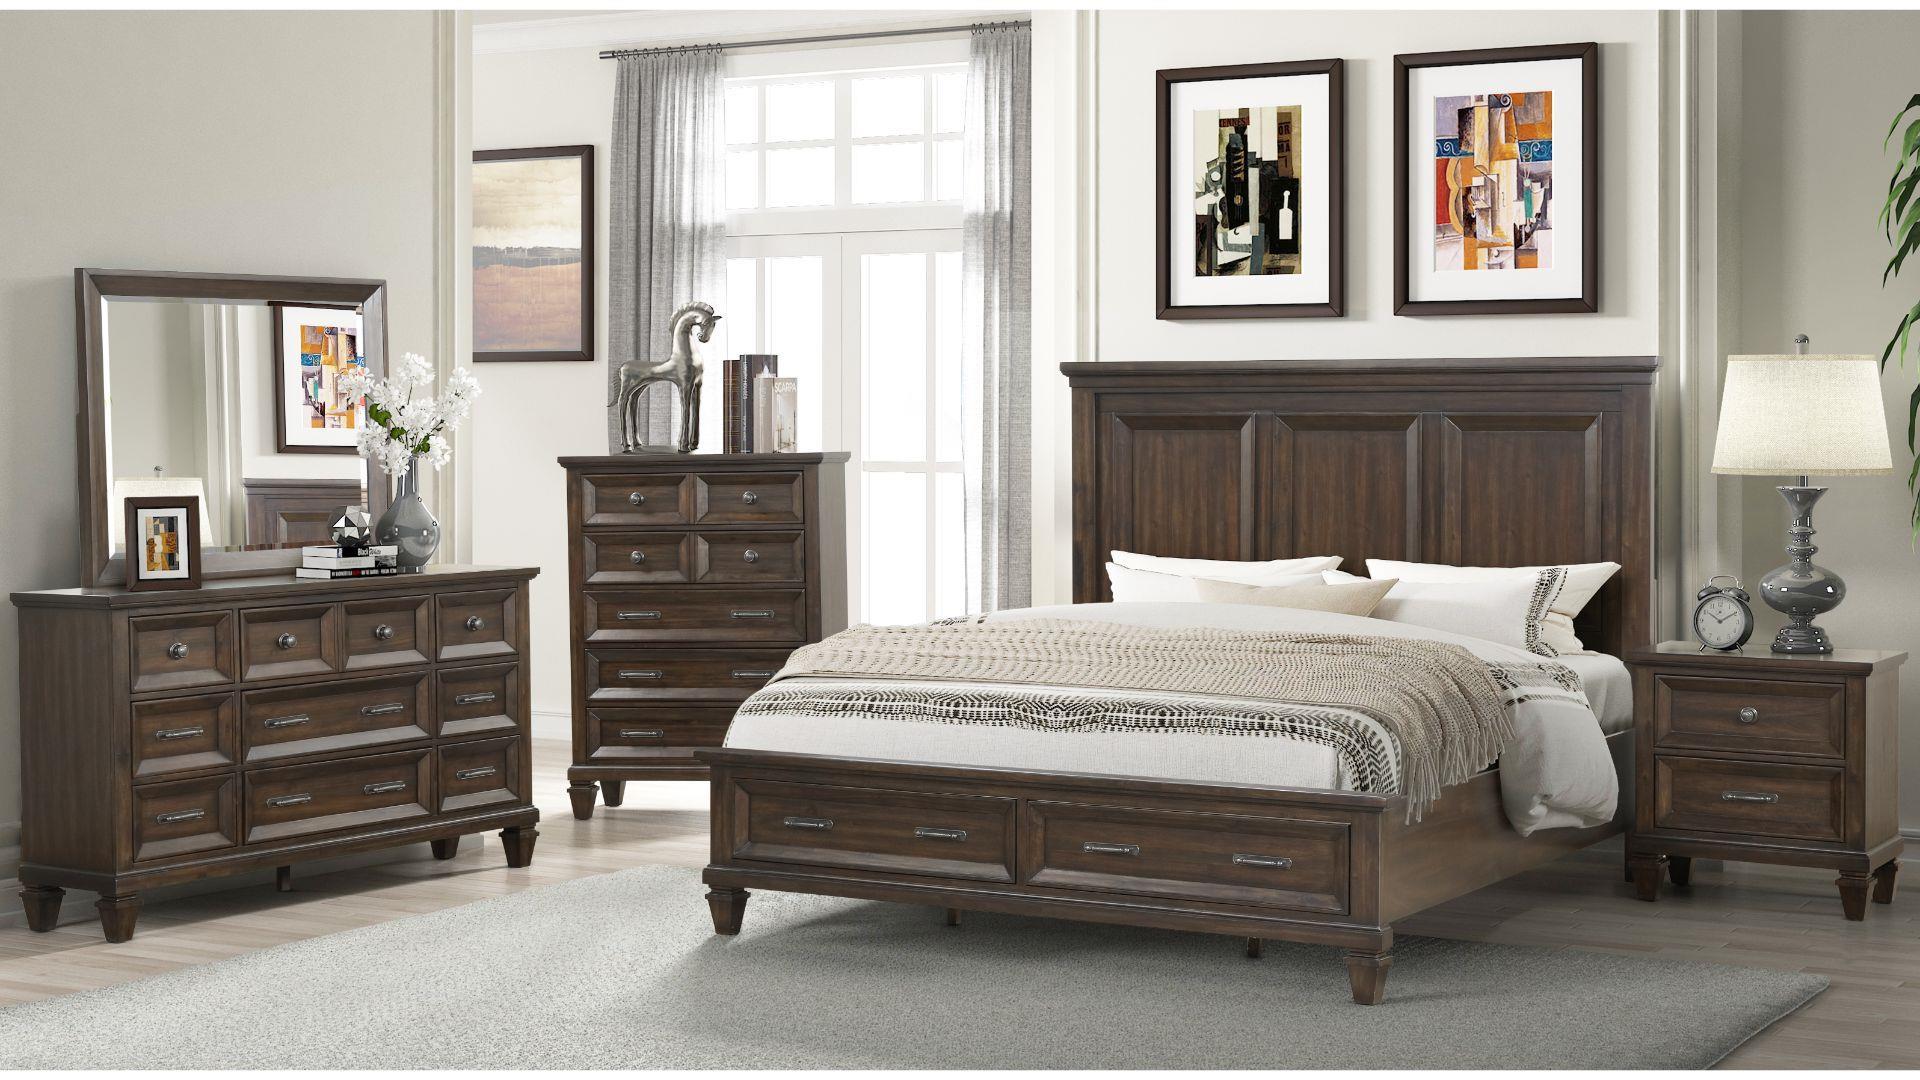 

    
Walnut Solid Wood Queen Bedroom Set 5P HAMILTON Galaxy Home Classic Traditional
